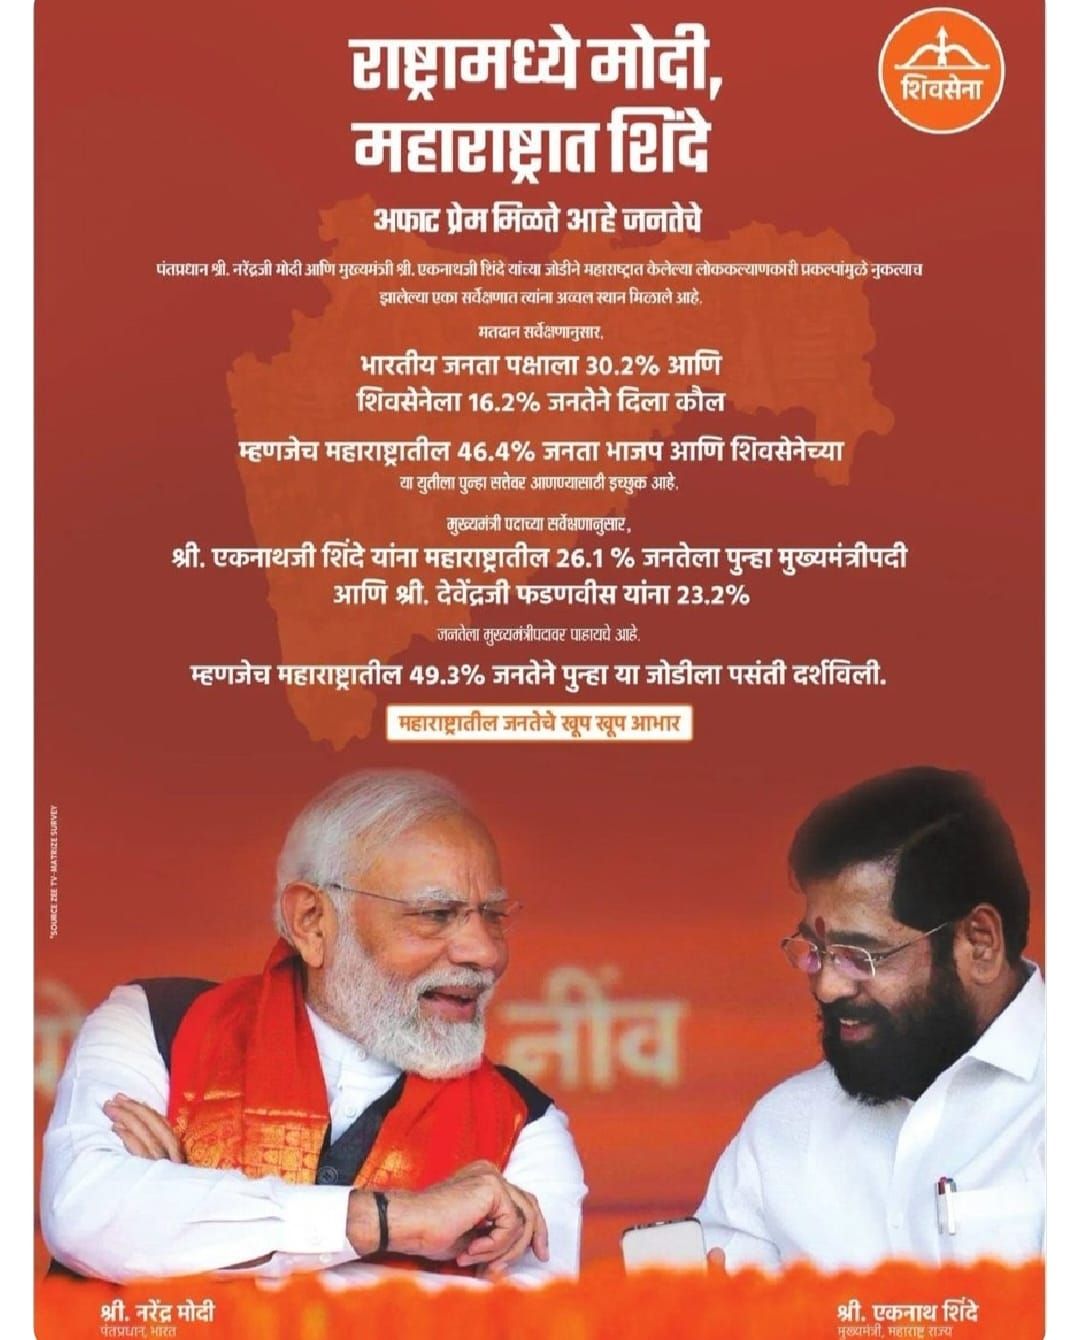 maharashtra shinde govt ad sign of eknath shinde bjp devendra fadnavis - Satya Hindi